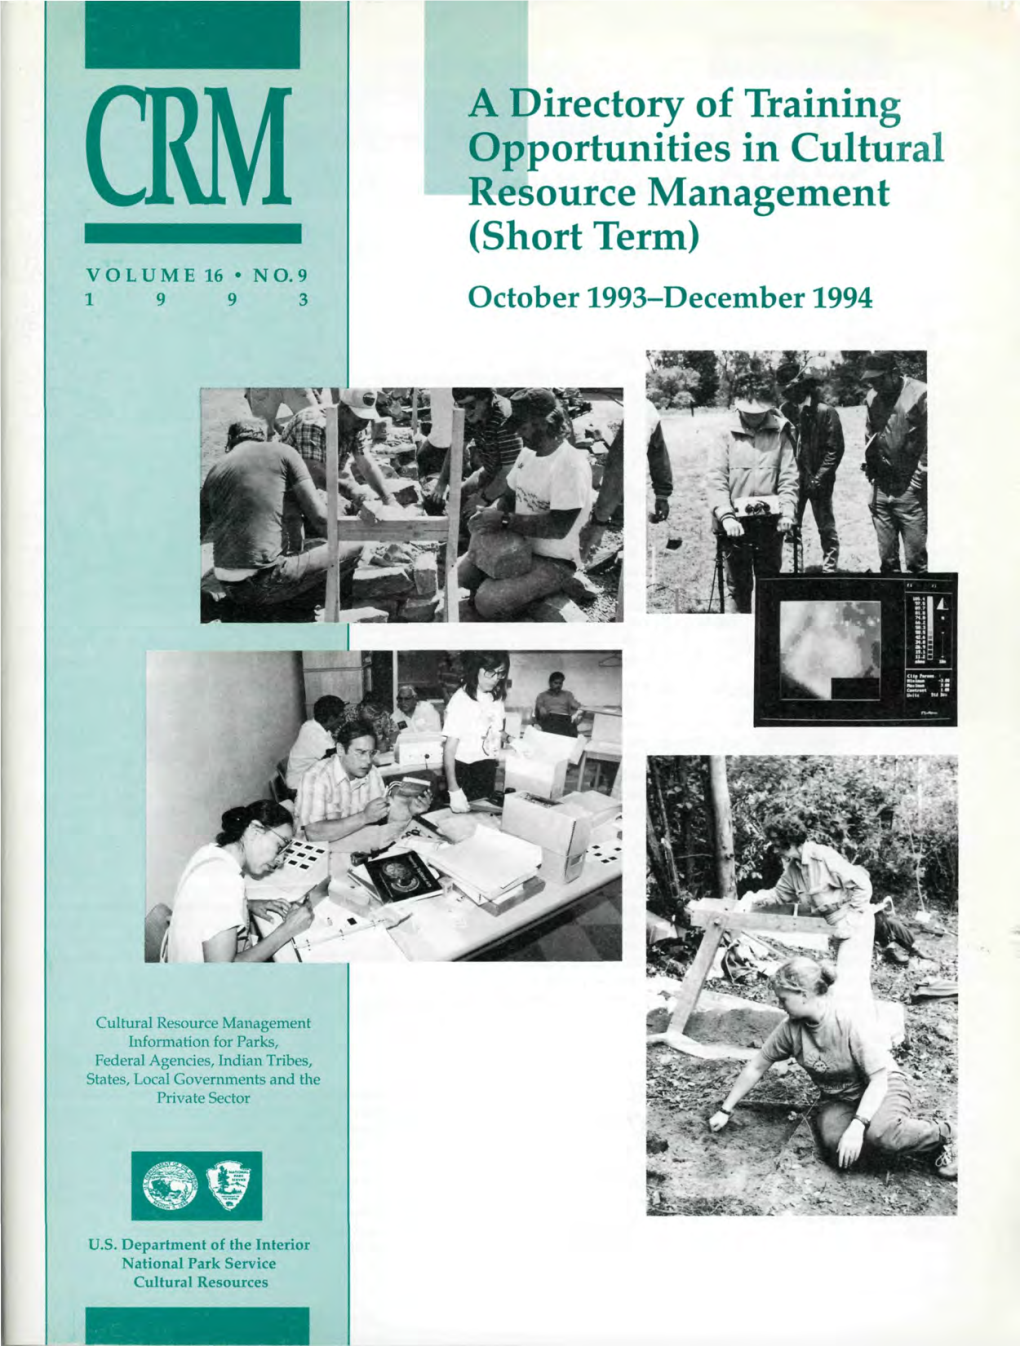 CRM Vol. 16, No. 9 Training Directory